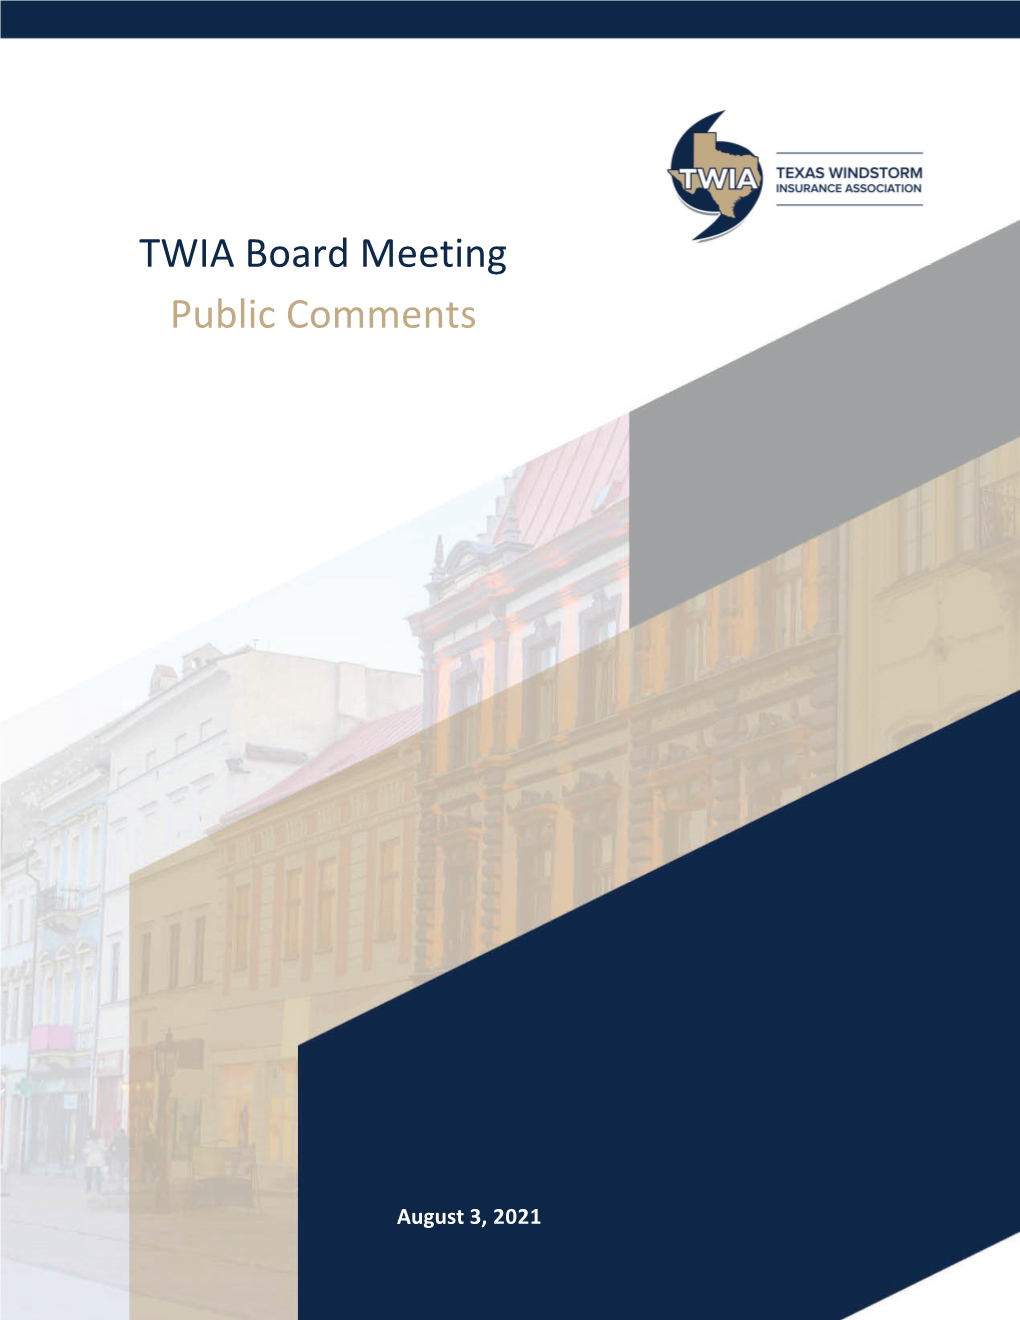 TWIA Board Meeting Public Comments